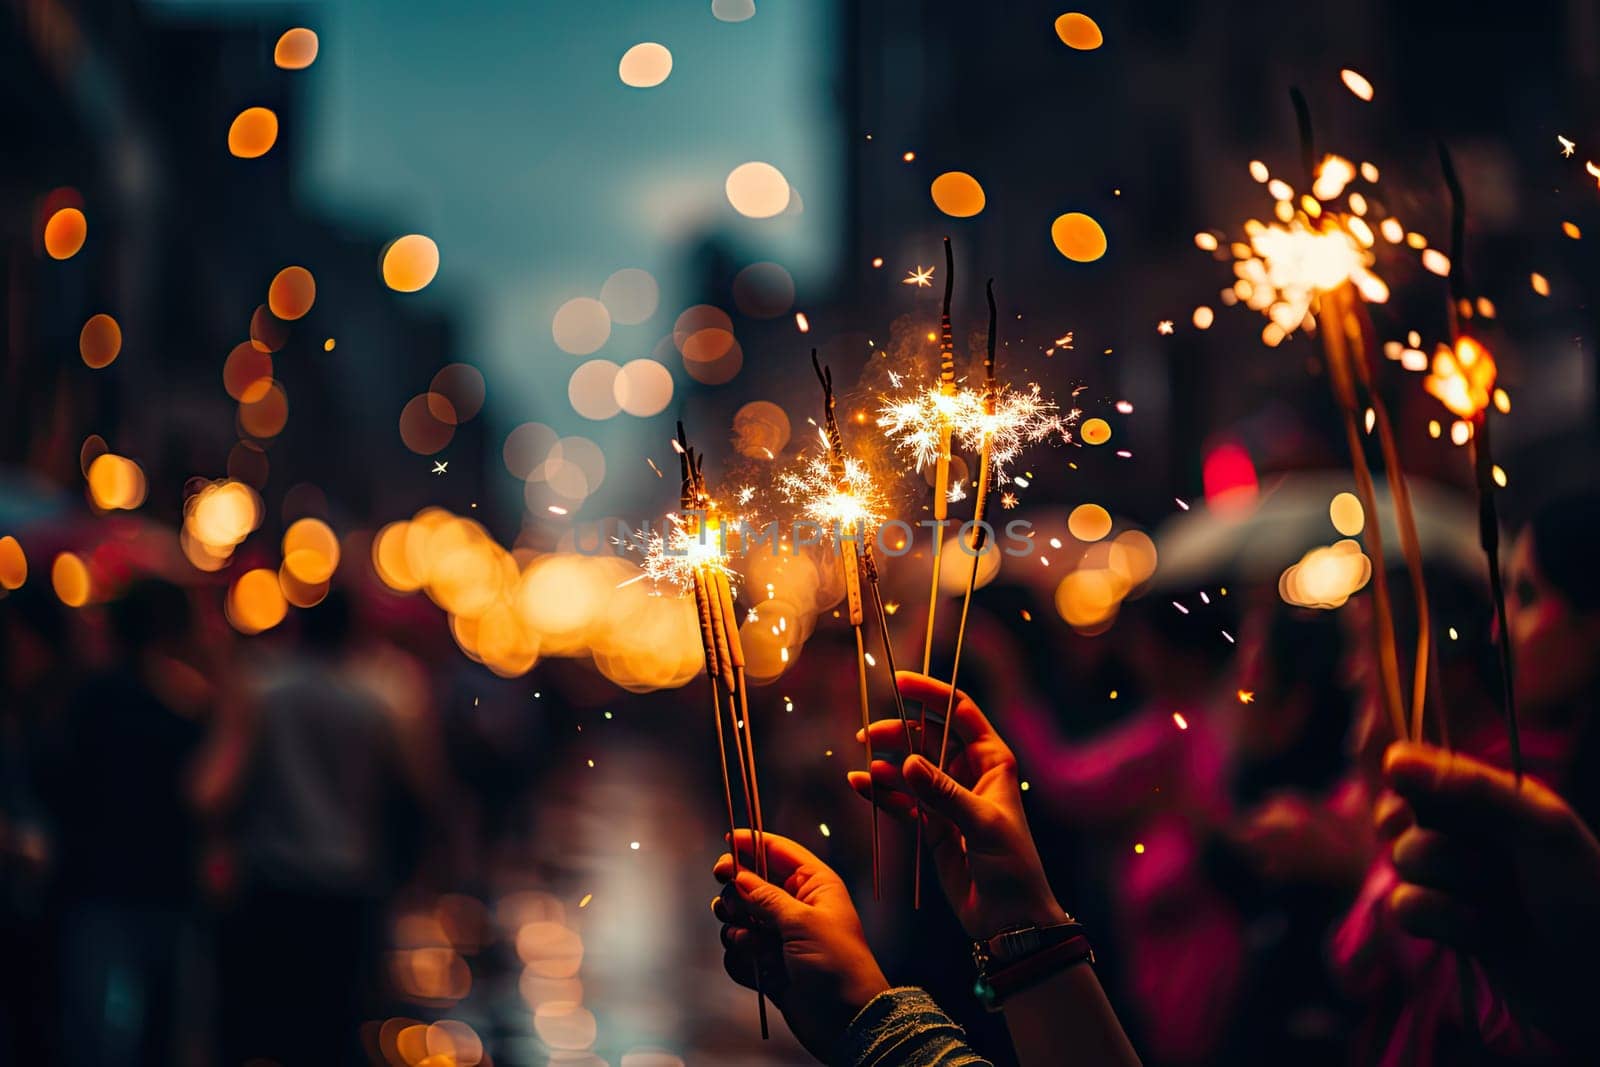 A Joyful Celebration of Lights: People Delight in Sparklers on a Festive Evening